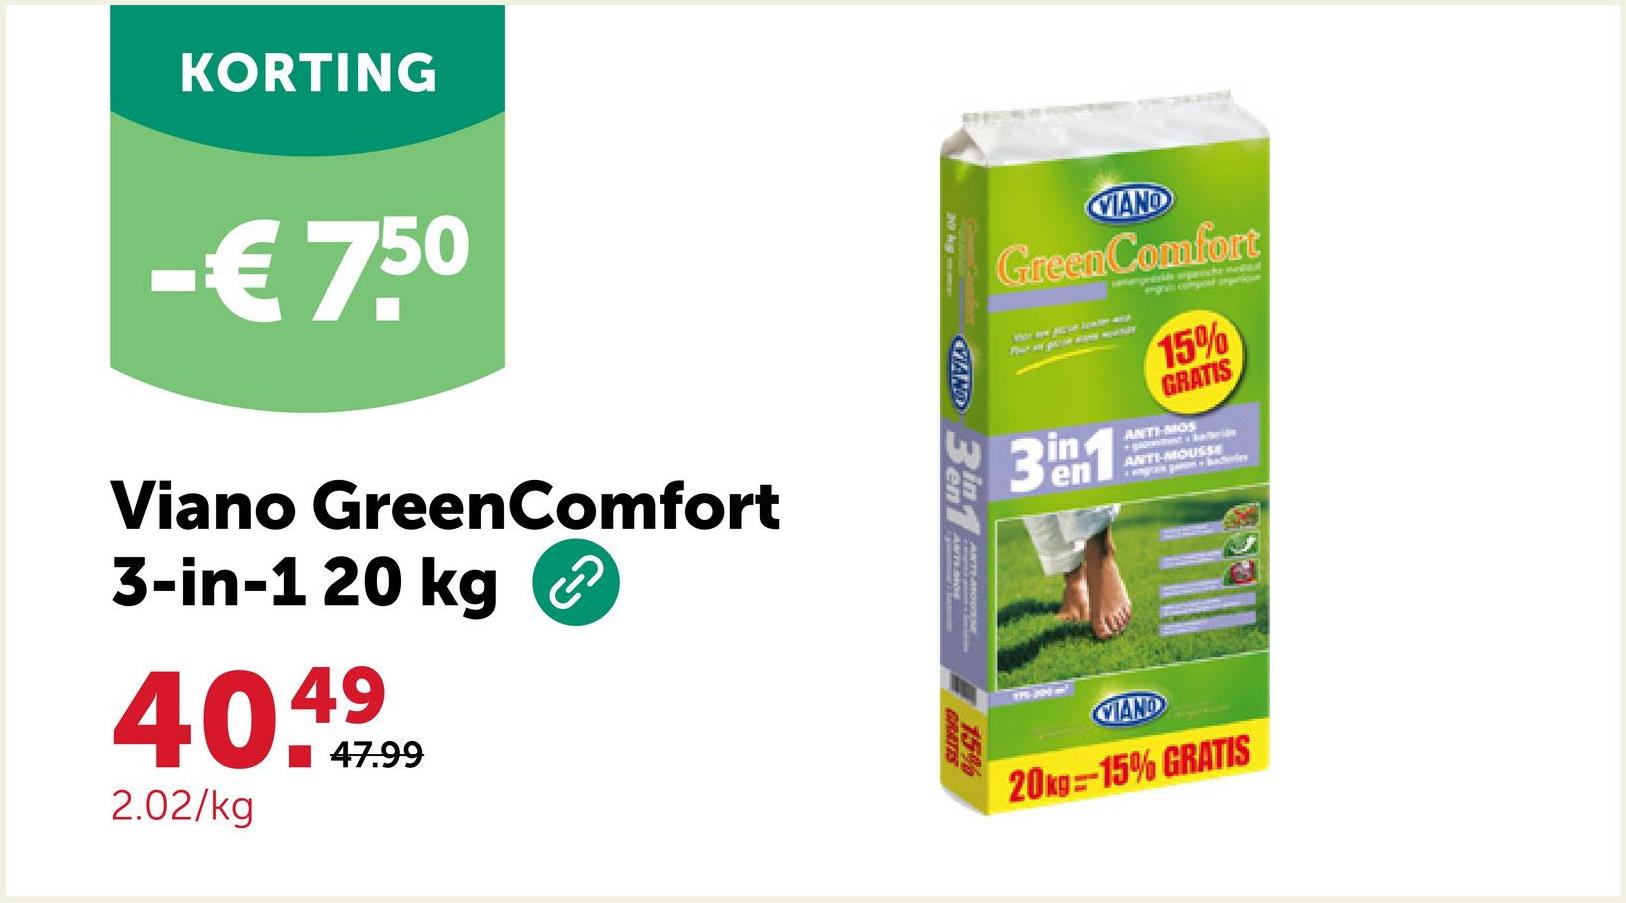 KORTING
-€7.5⁰
Viano GreenComfort
3-in-1 20 kg
40499
47.99
2.02/kg
CAND 31
ANTIMO
VIAND
Green Comfort
15%
GRATIS
ANTI-MOS
+gst baterijo
ANTI-MOUSSE
+ ingrain panos
3⁰m1
en
MAND
20kg=-15% GRATIS